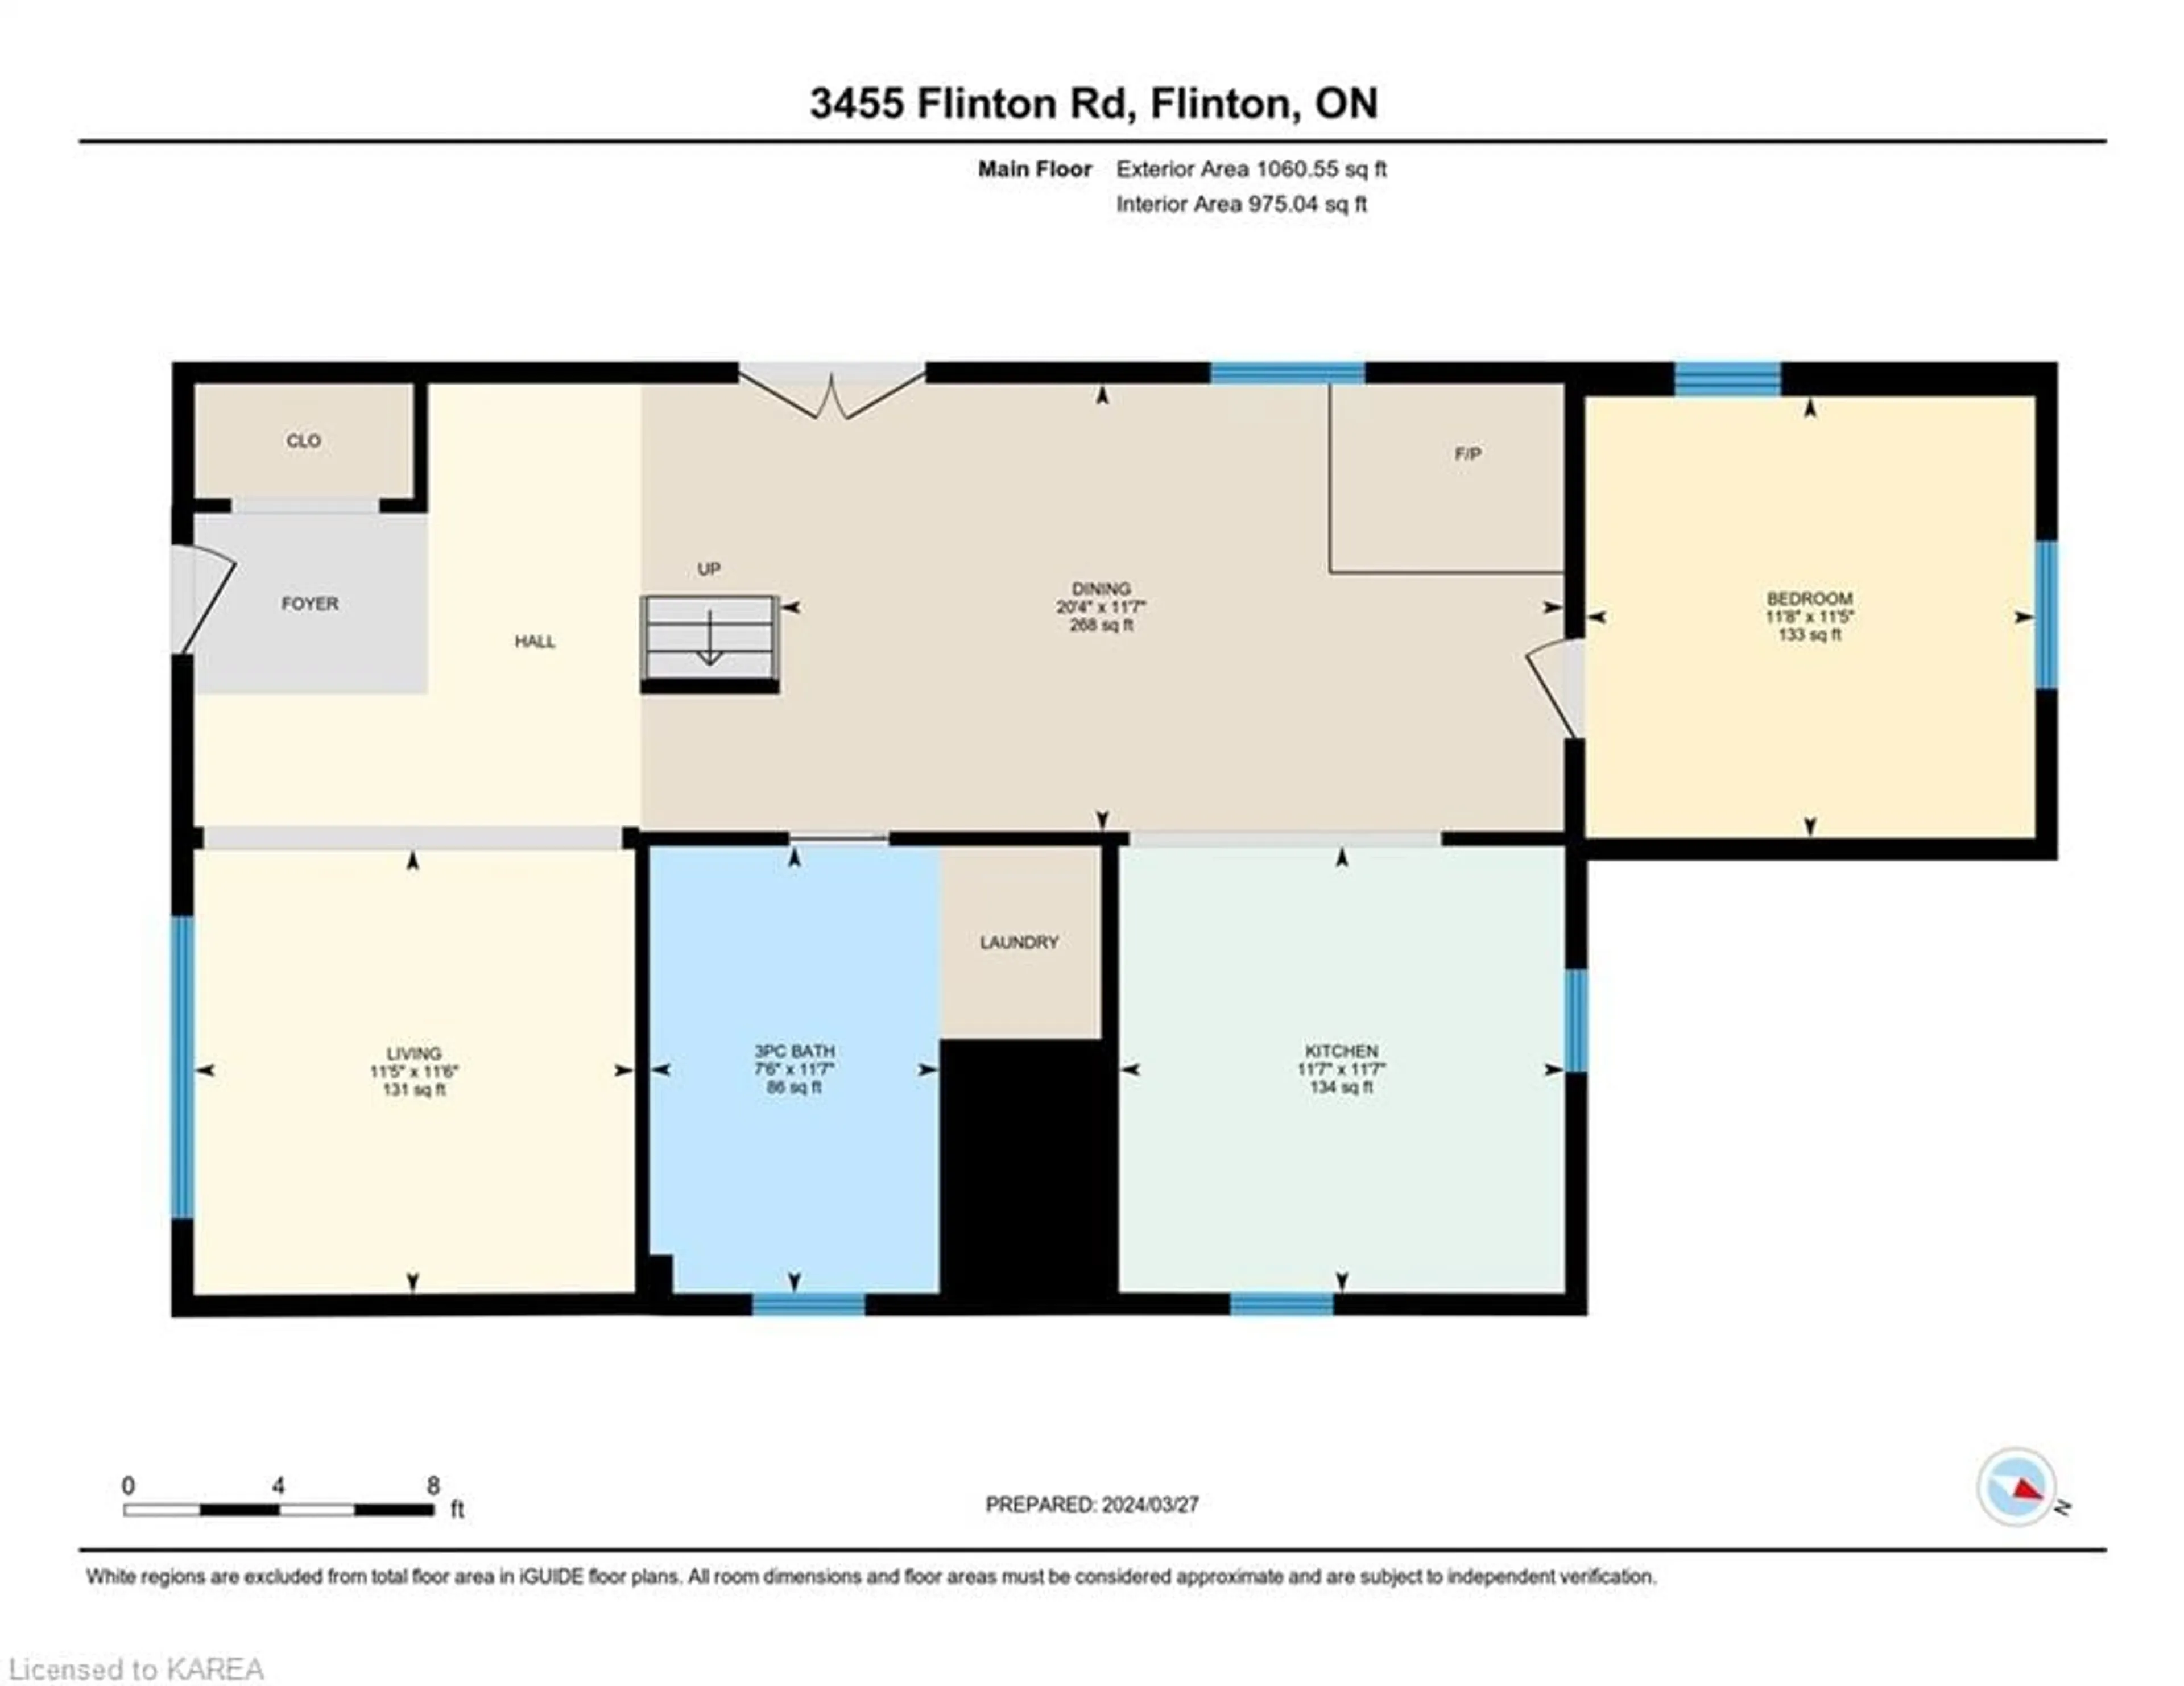 Floor plan for 3455 Flinton Rd, Flinton Ontario K0H 1P0